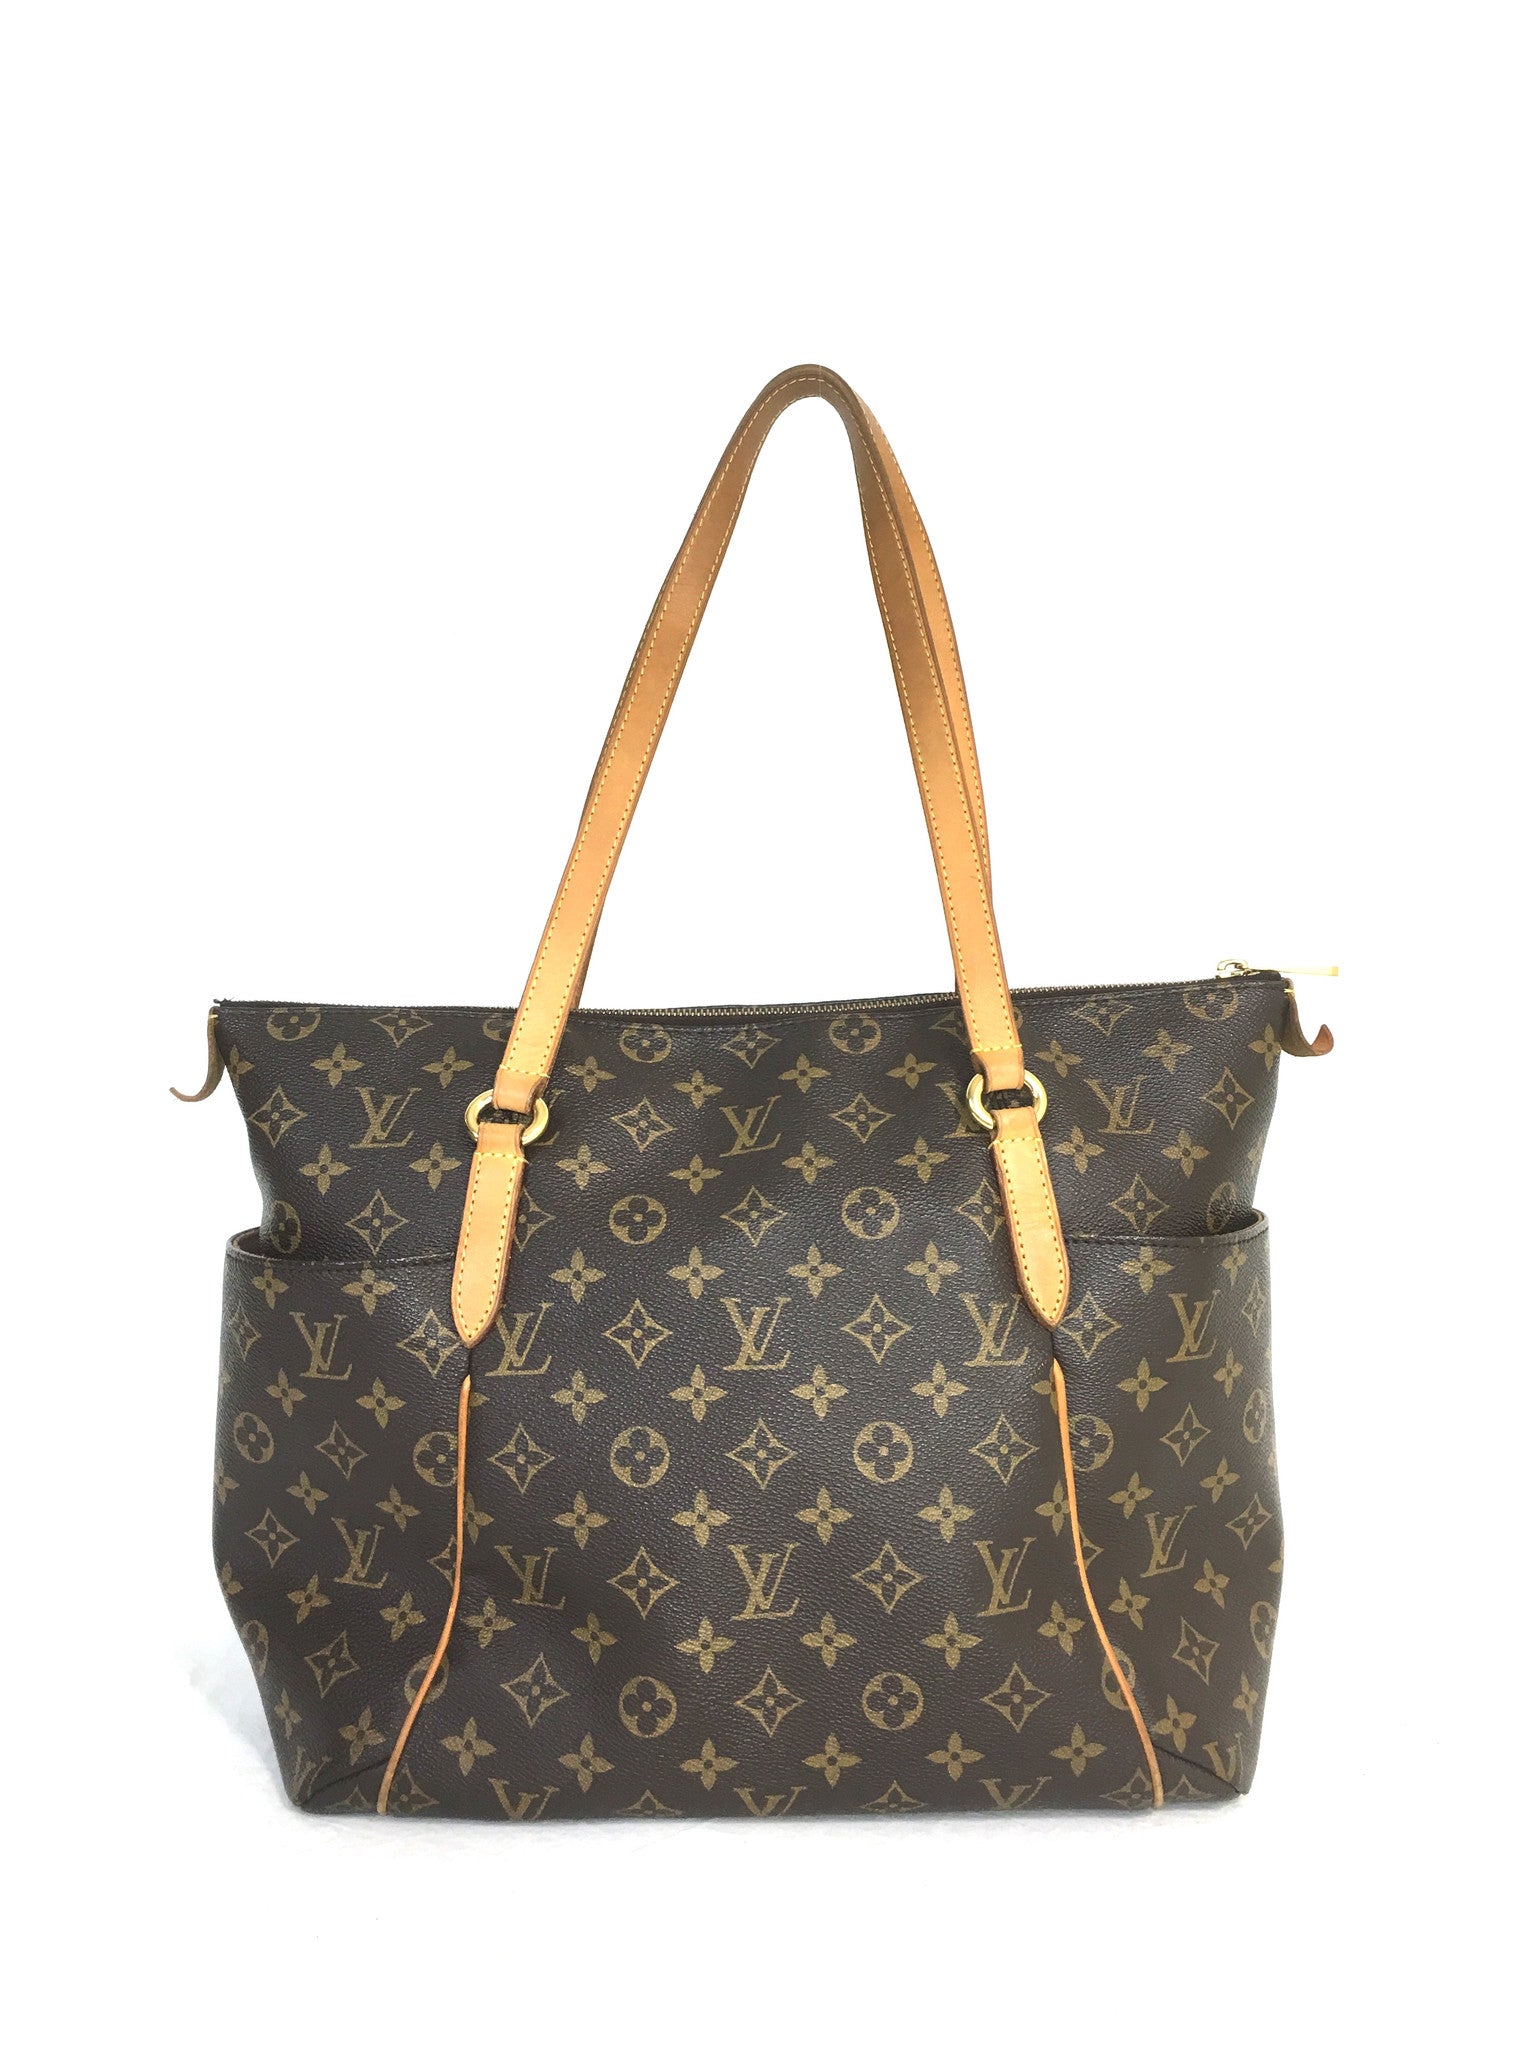 greenscreen $1,000,000 Louis Vuitton Bag 🤯👀🔥 #LouisVuitton #Speed